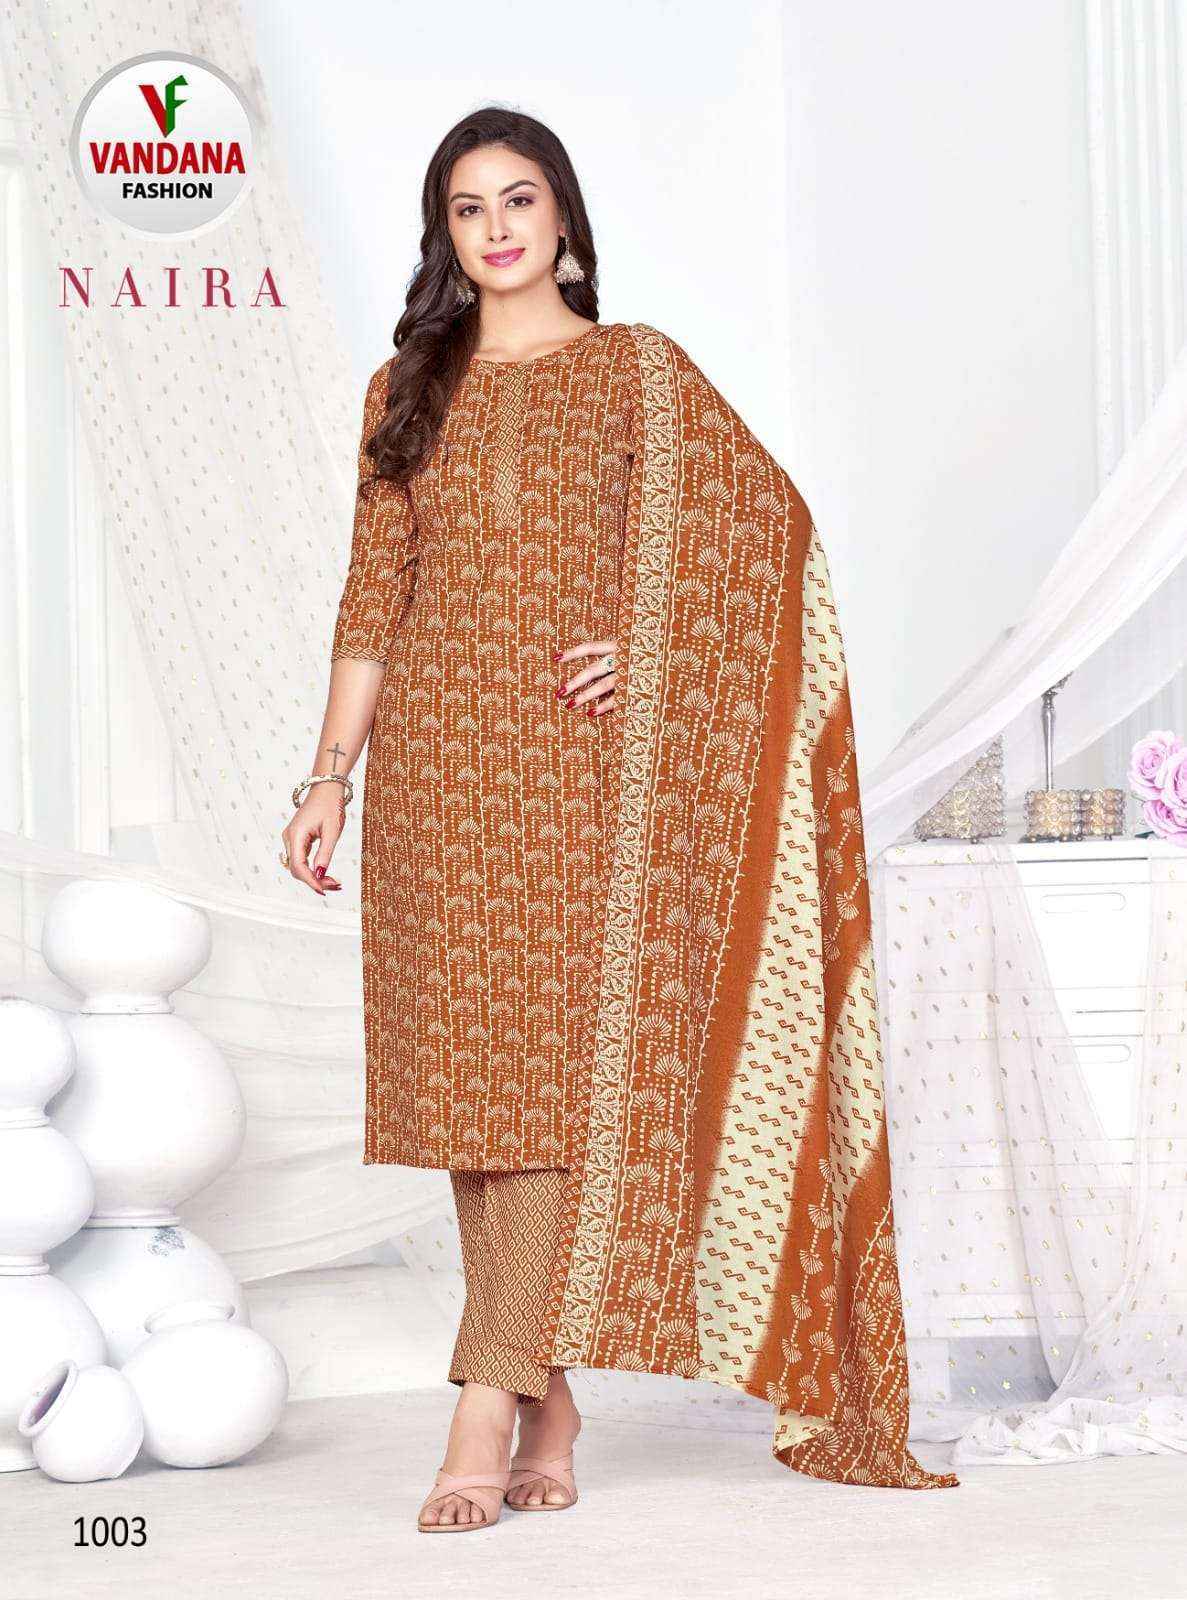 Vandana Fashion Naira Cotton Dress Material Wholesale Price